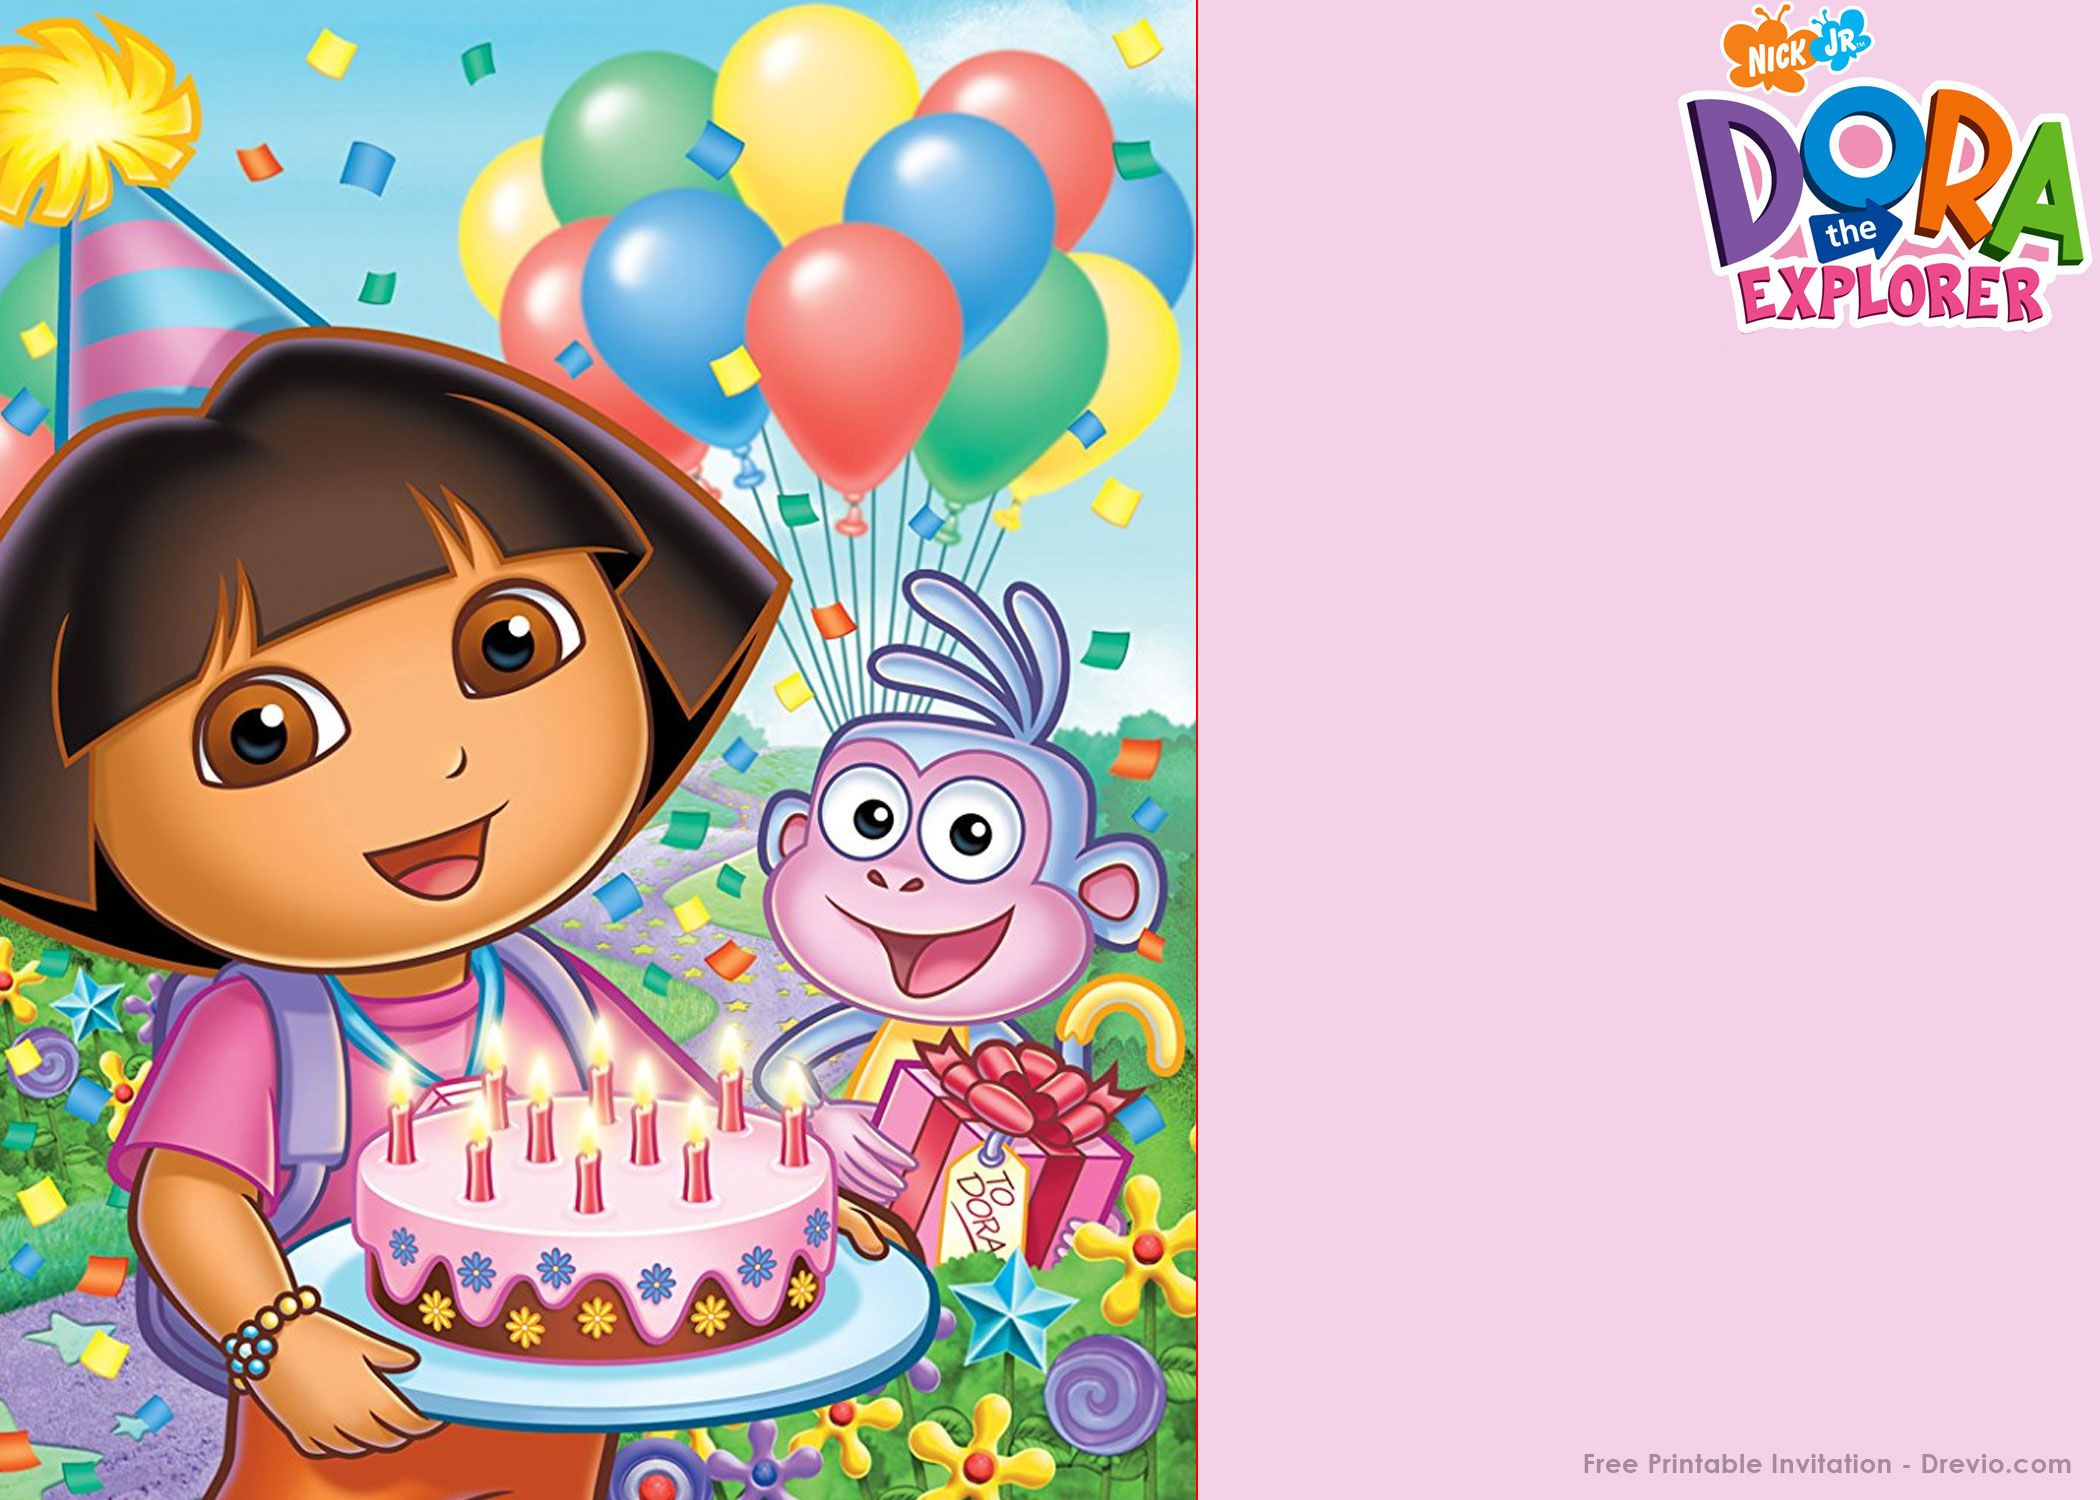 Free Printable Dora The Explorer Party Invitation Template | Party with regard to Dora The Explorer Free Printable Invitations